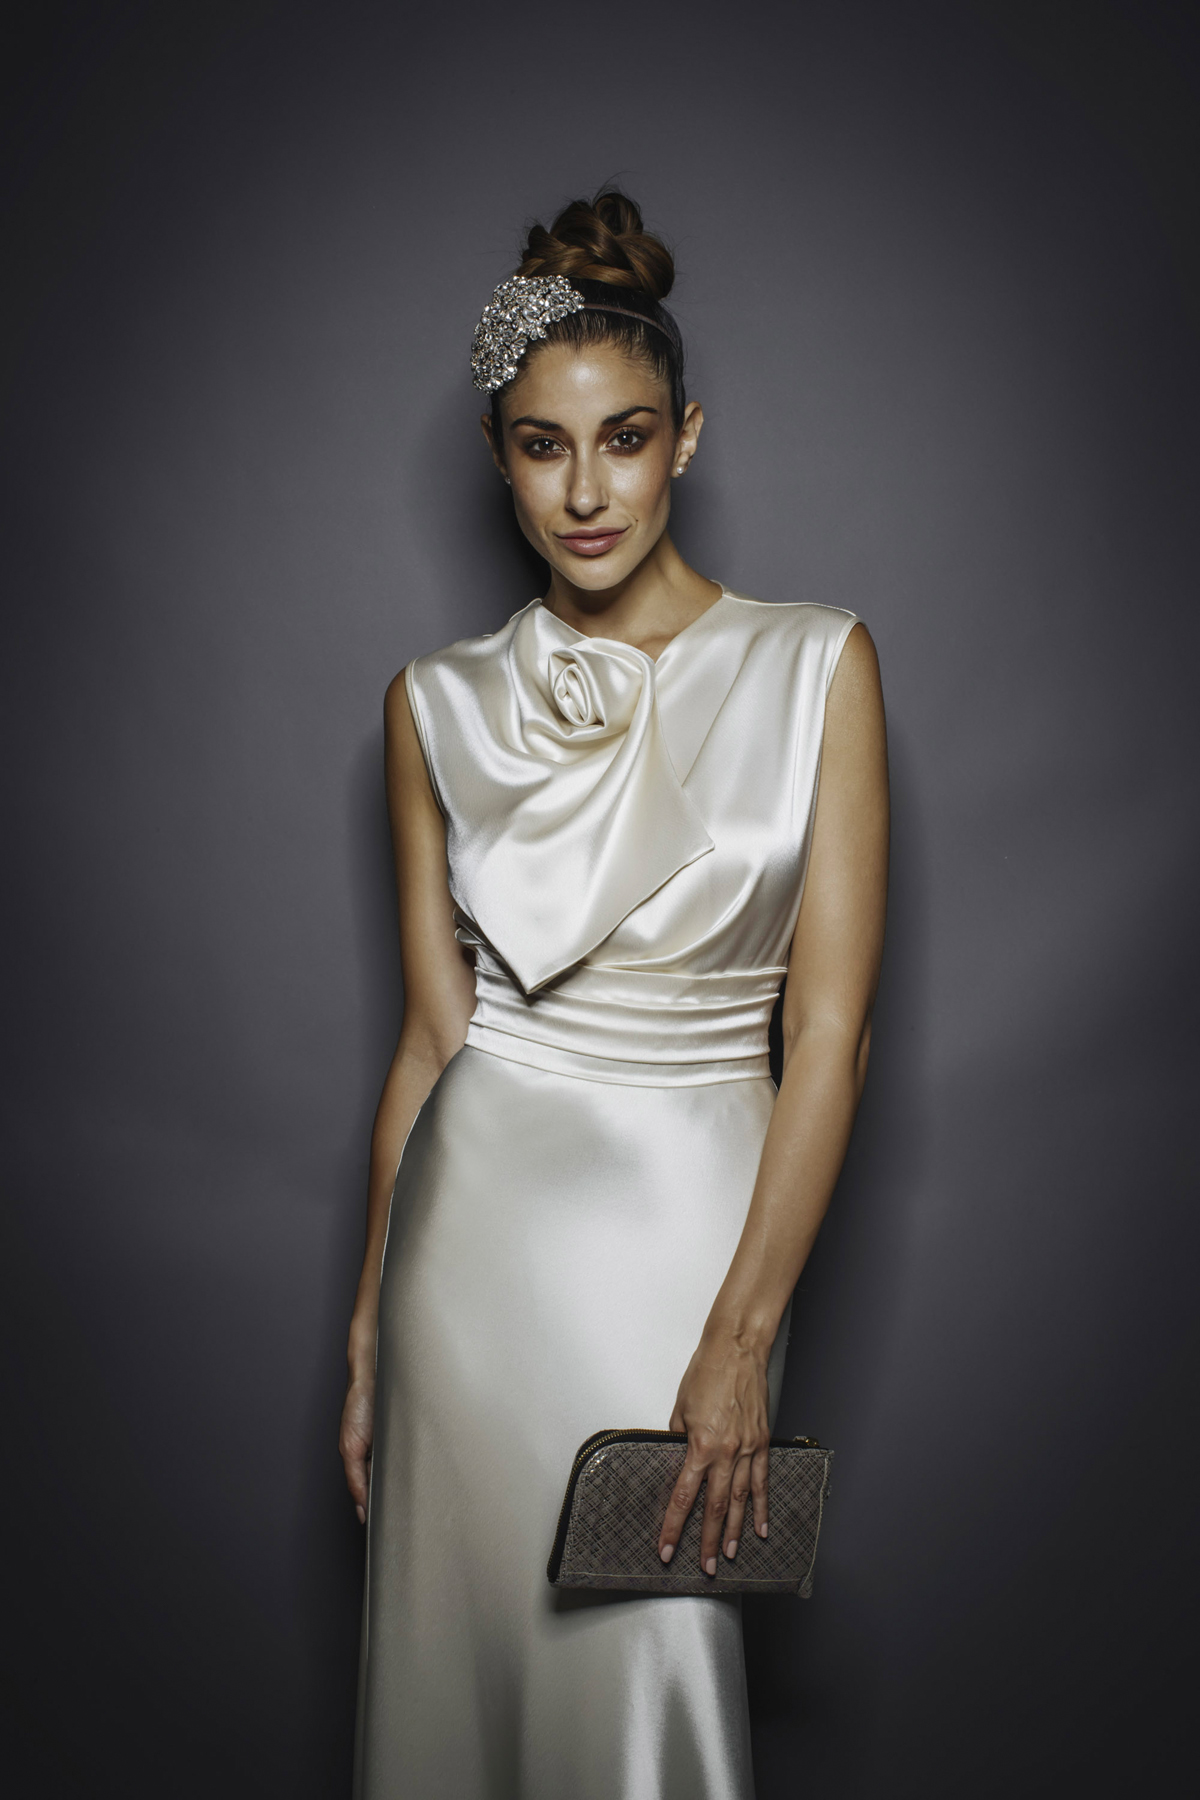 Hackerphotography Glamourous wedding dress studio028Kate David Fielden – Wallis Simpson